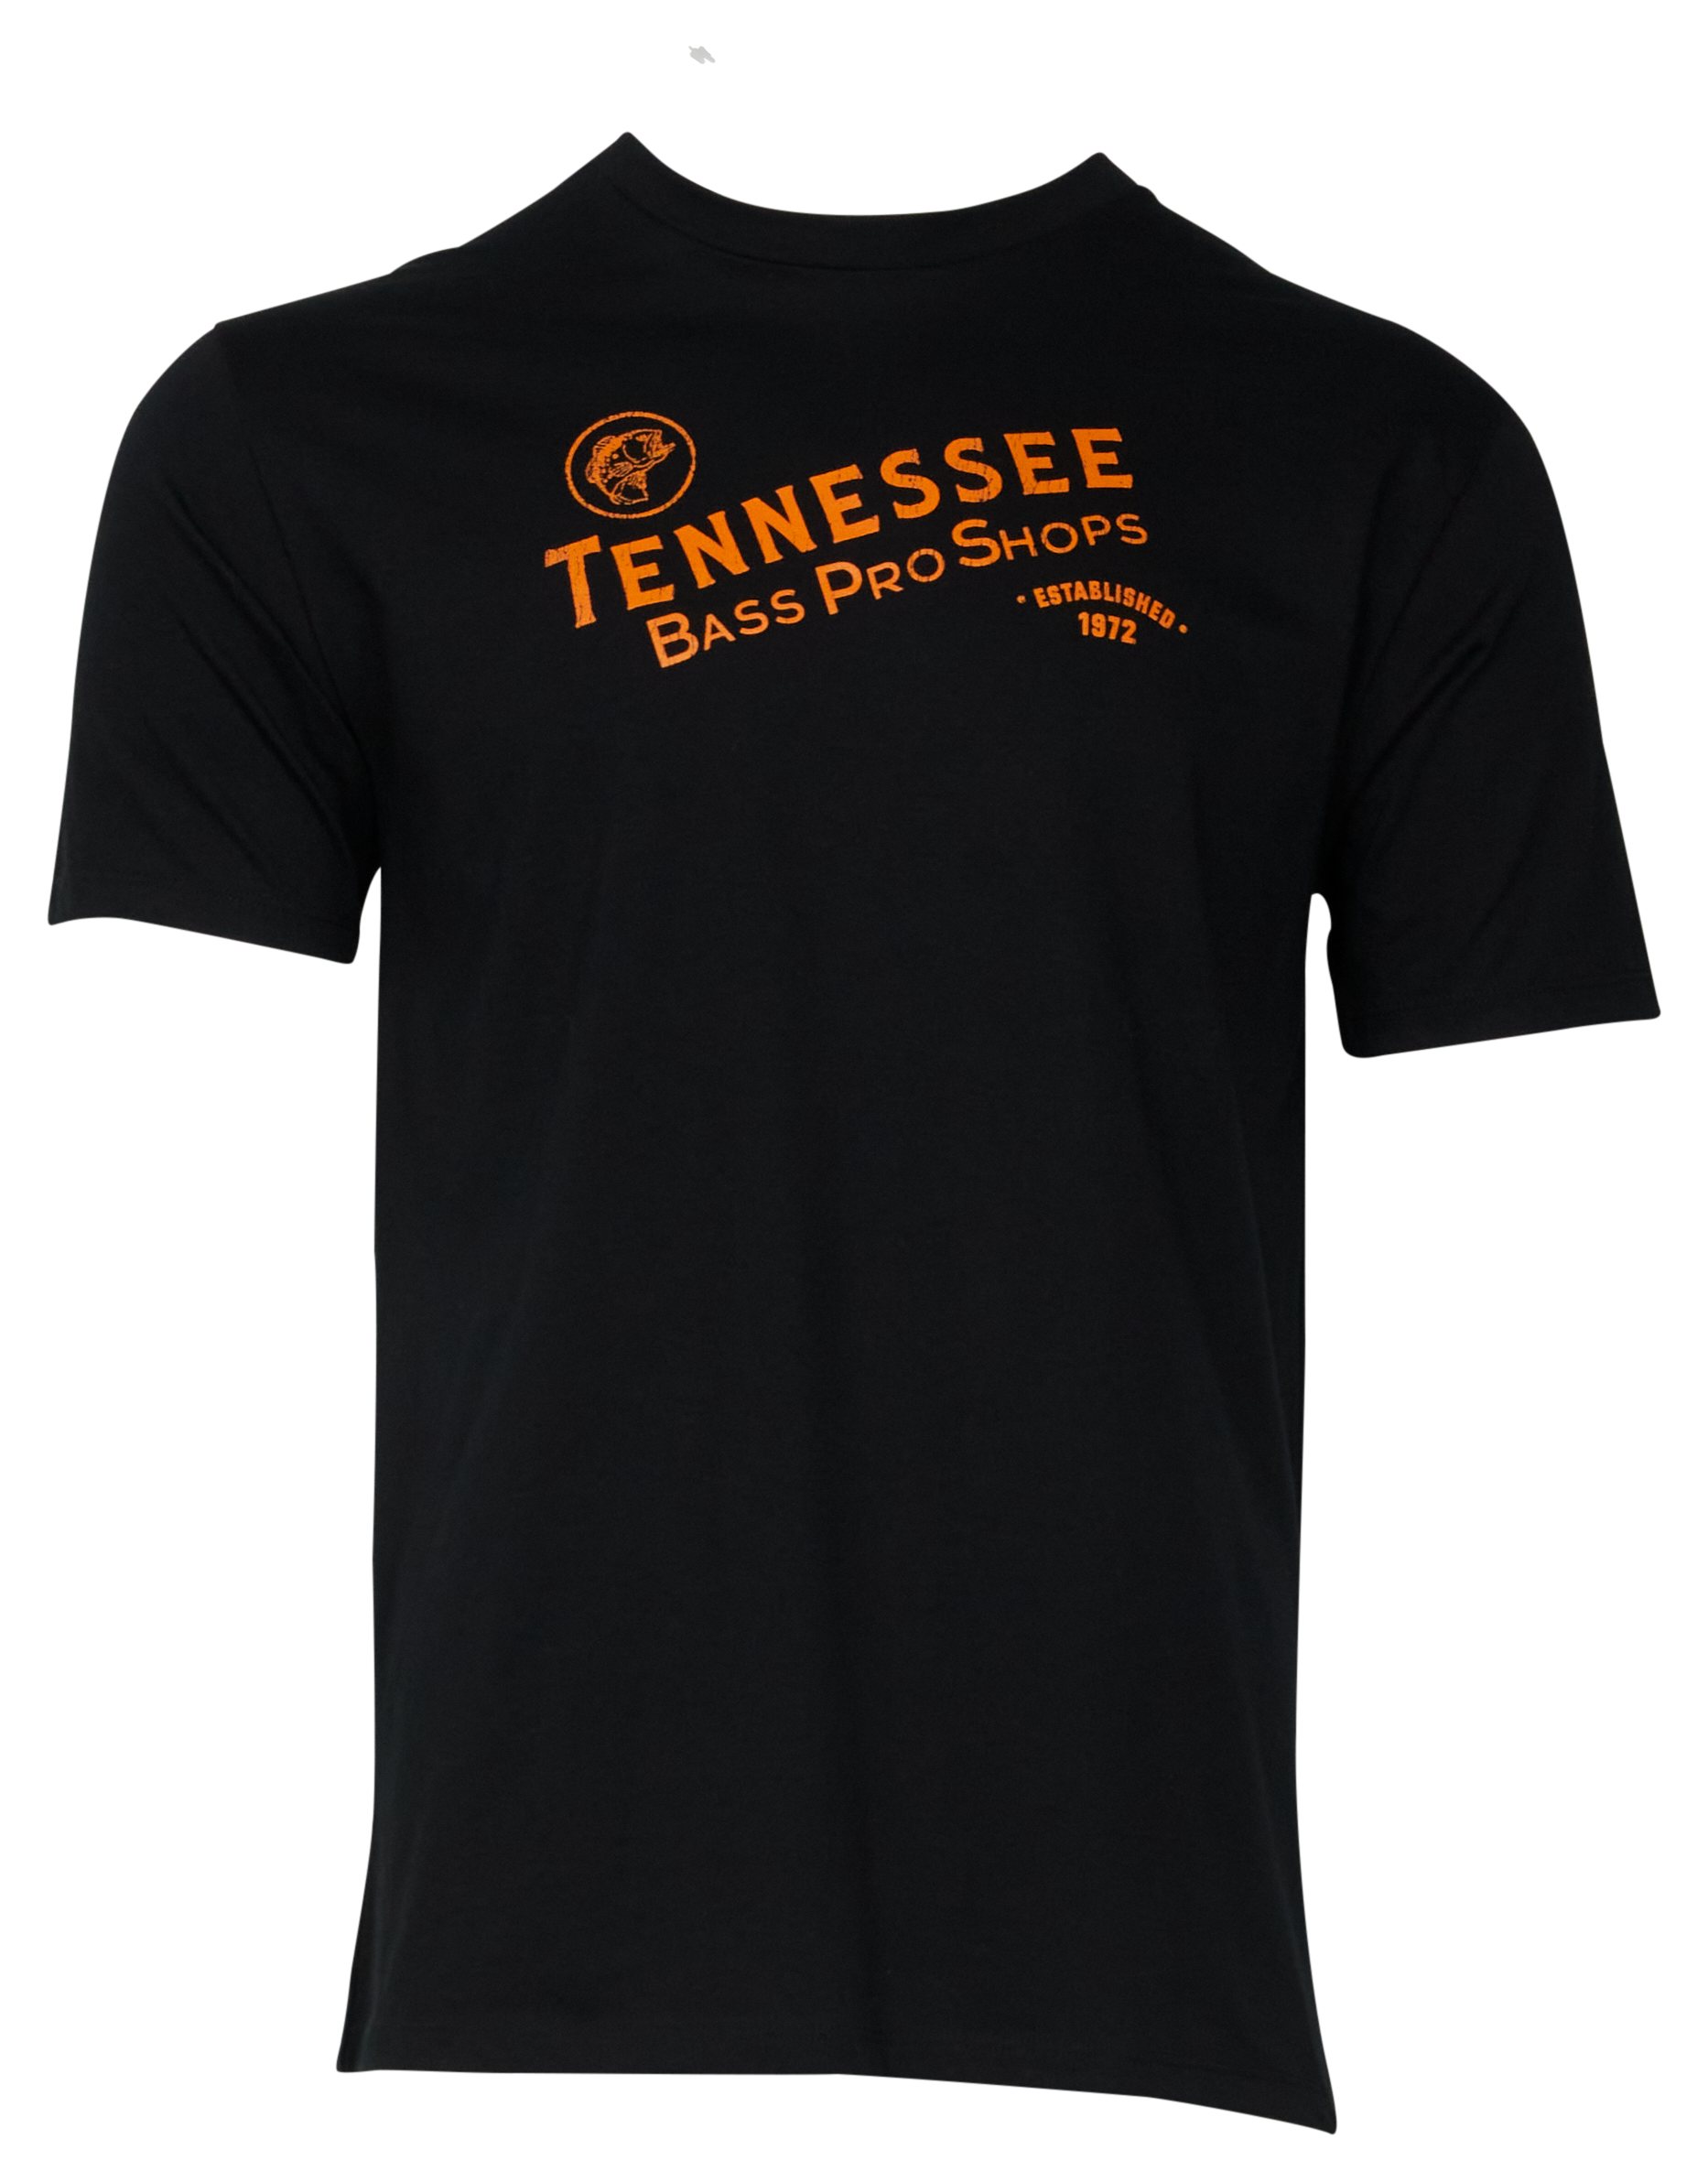 Bass Pro Shops Tennessee Script Short-Sleeve T-Shirt for Men - Black - M